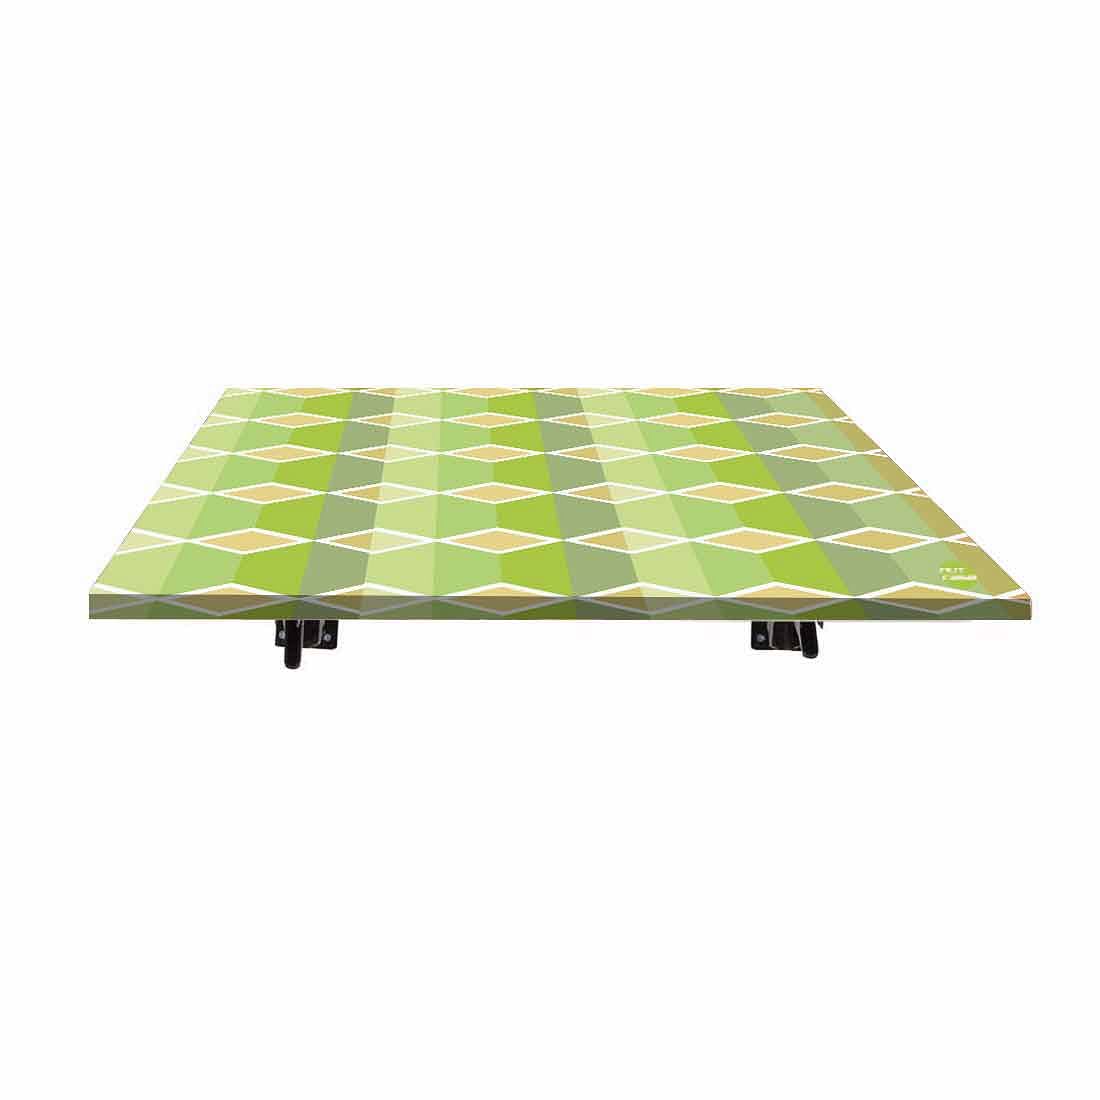 Wall Mounted Folding Study Table Desk - Green Geometric Nutcase